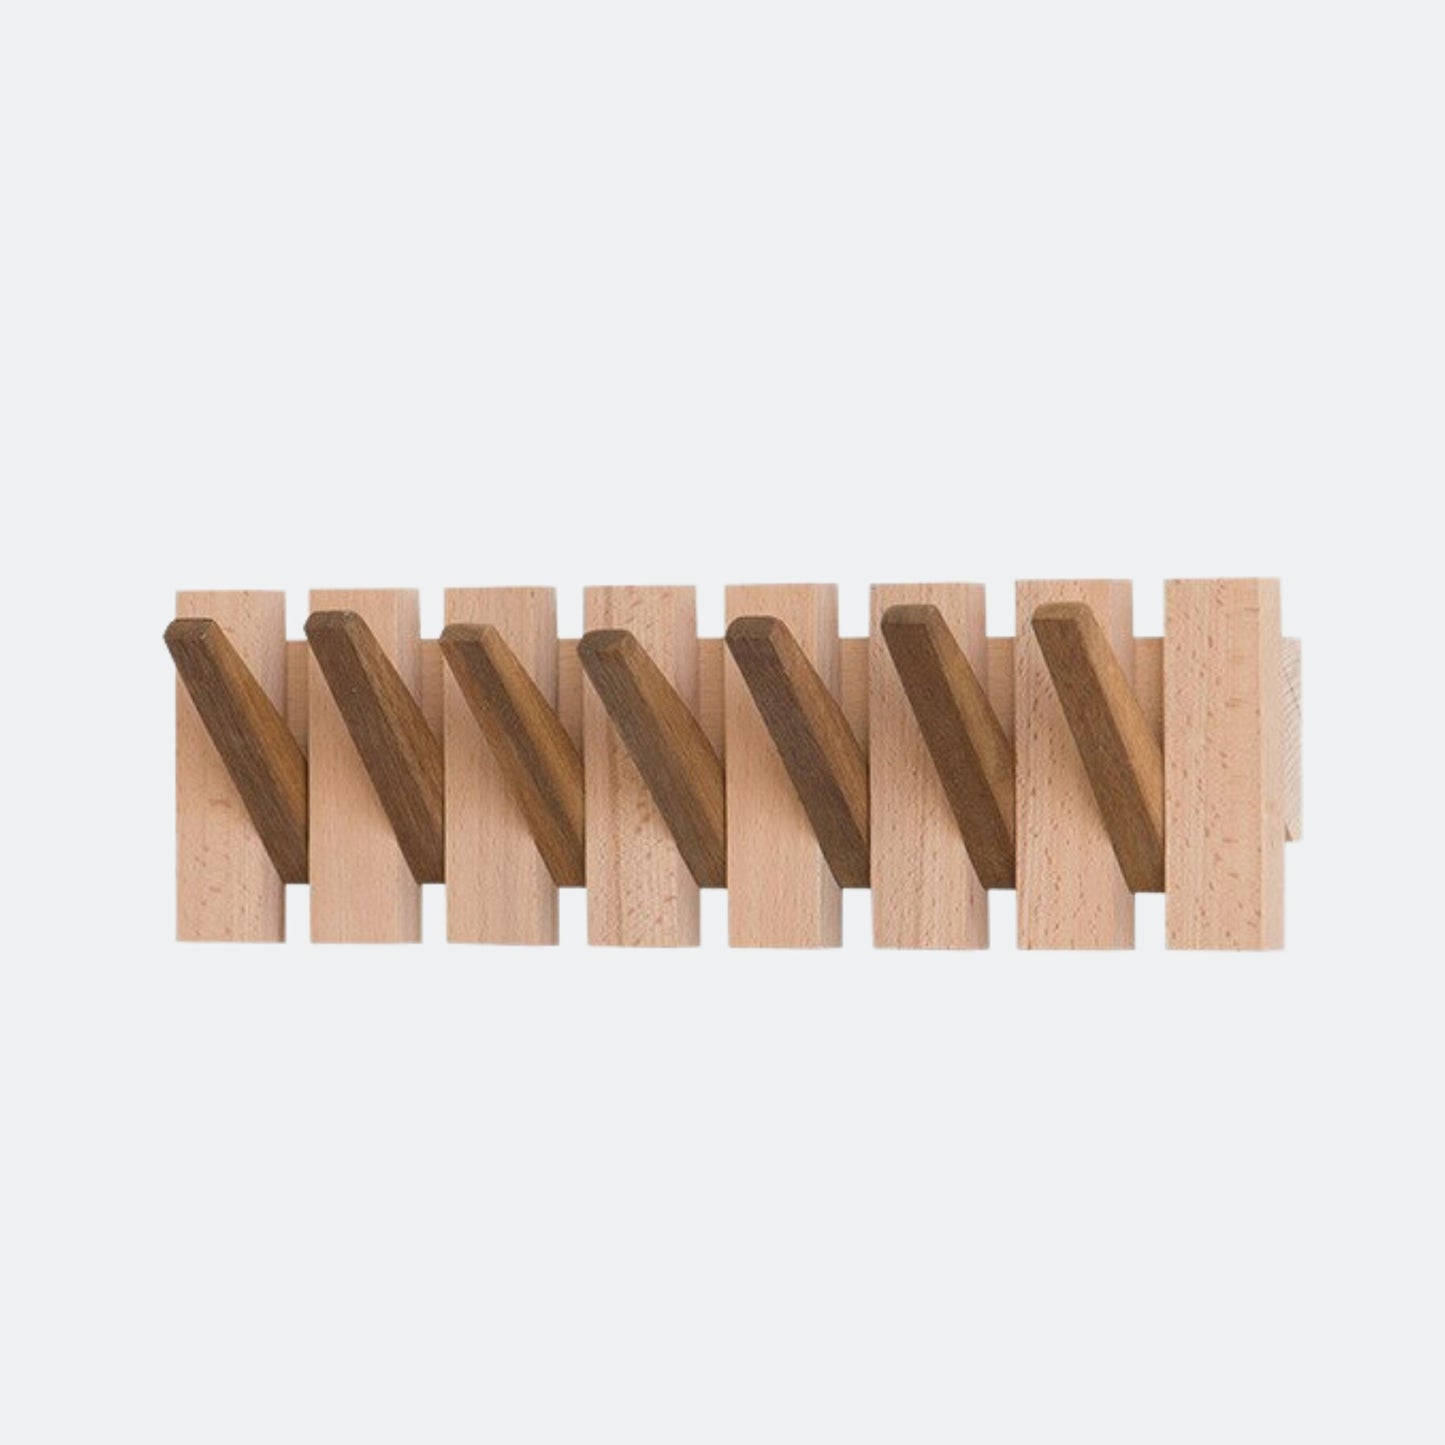 7 Hooks Wooden Piano Coat Rack Wall Mounted | Home & Living Decor